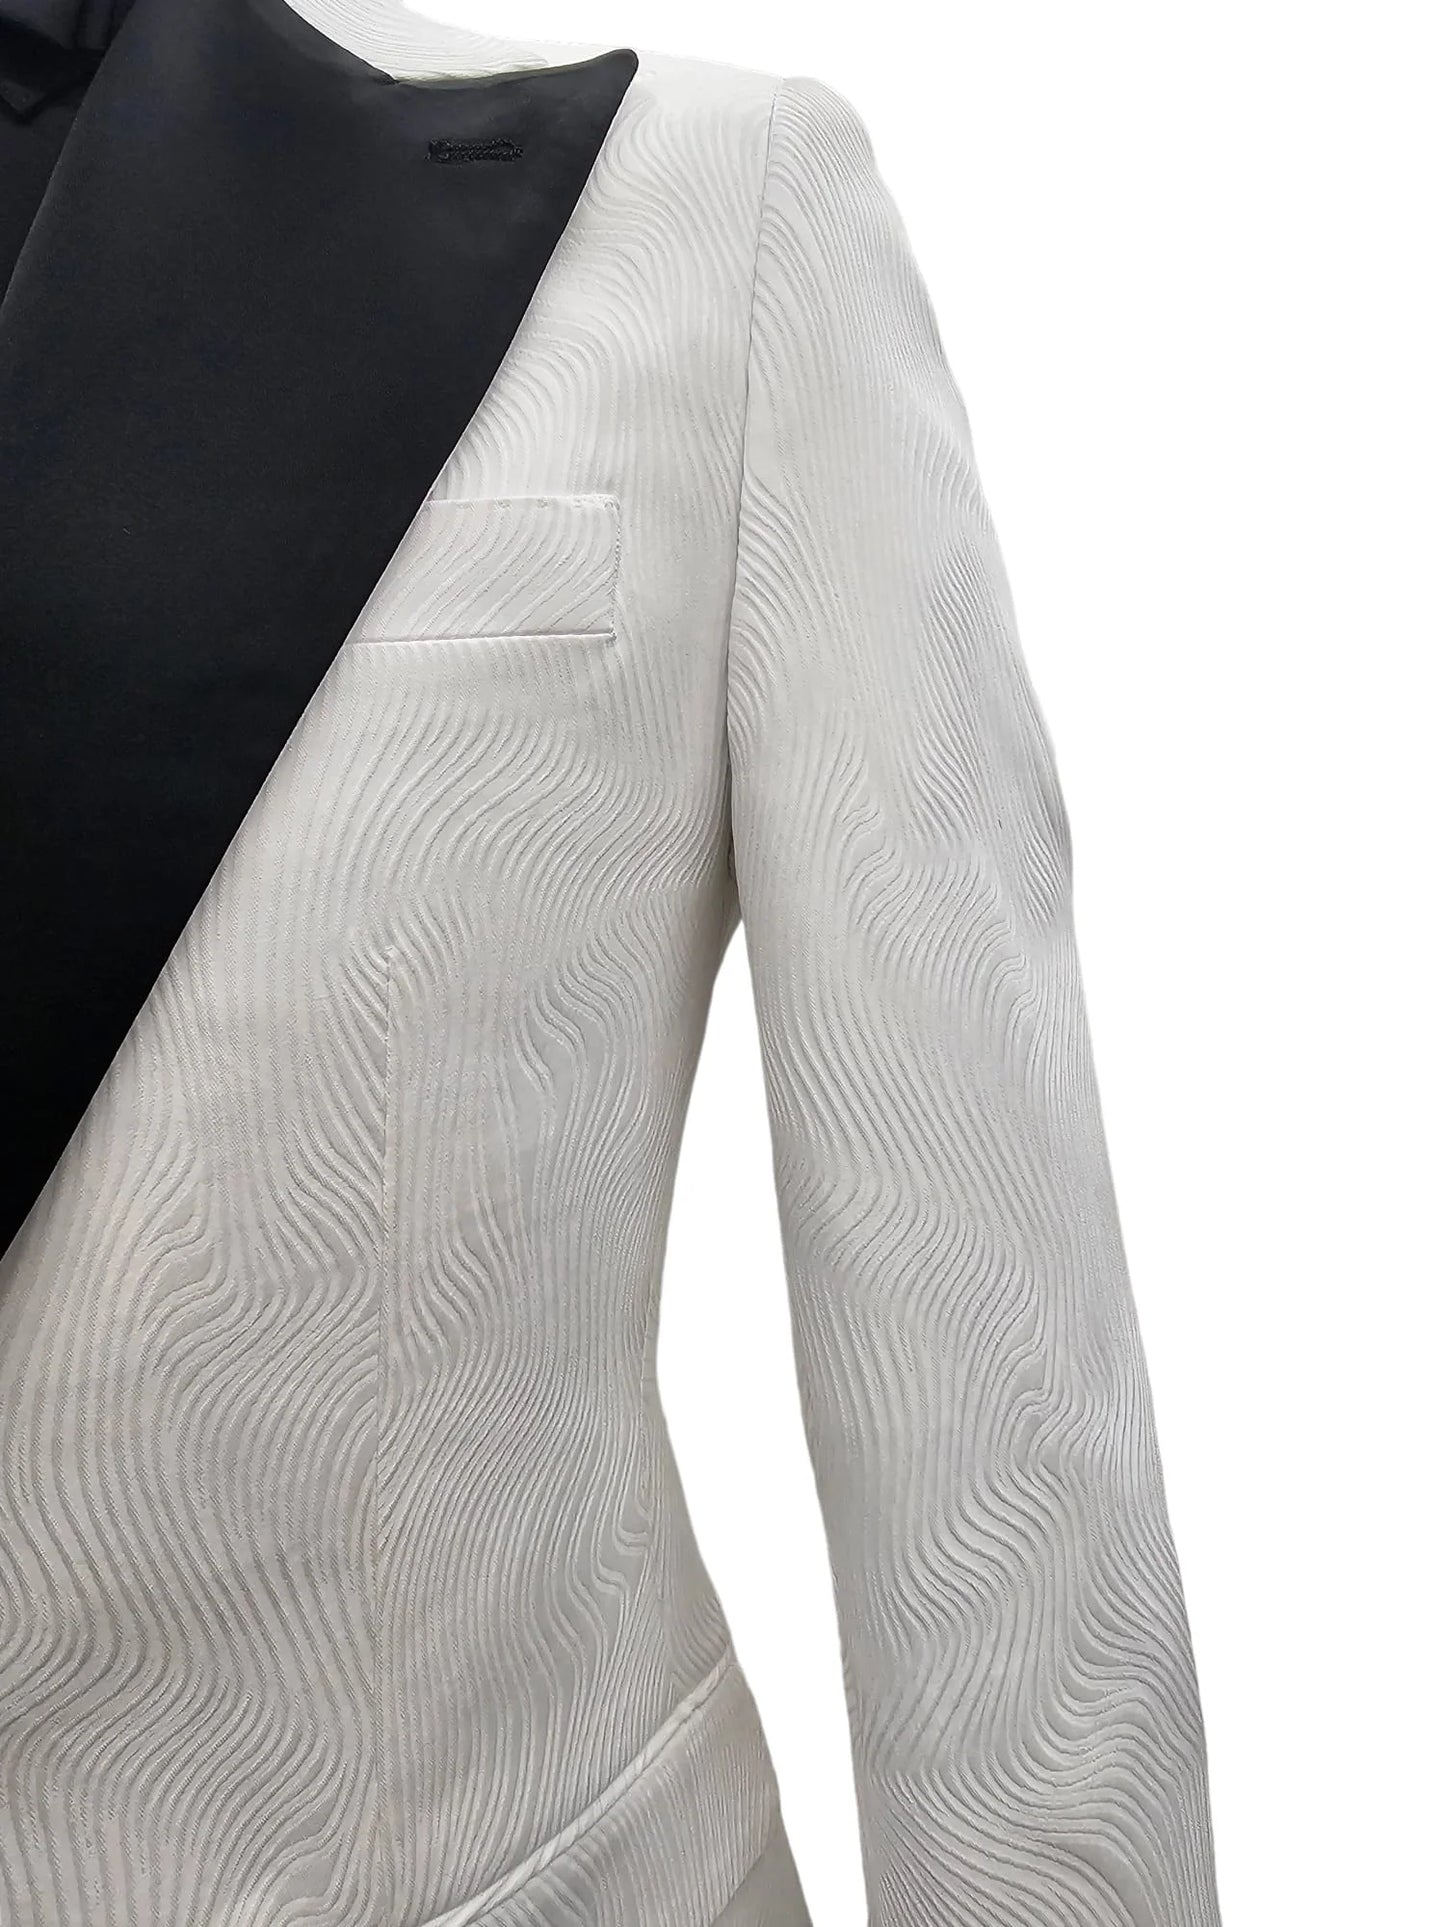 Elegant white tuxedo jacket with black trim and trousers on display."